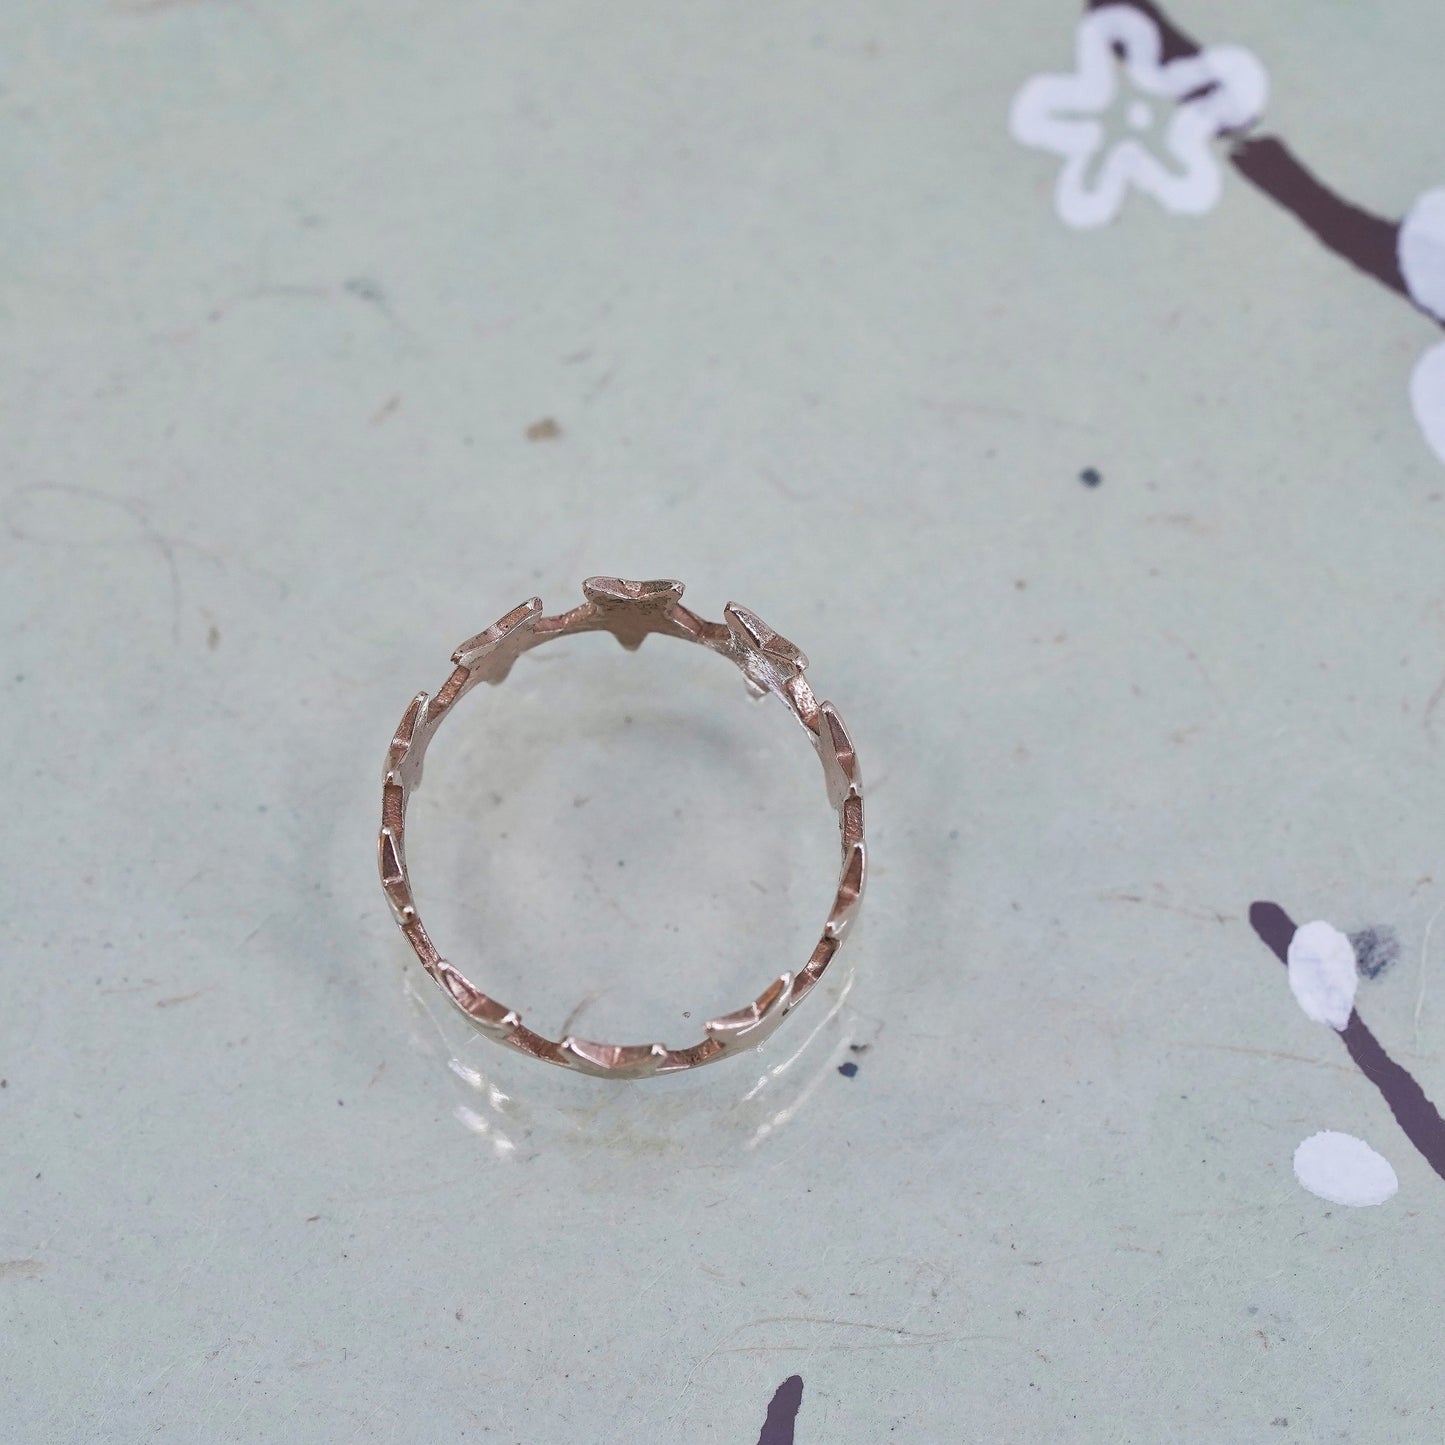 Size 5, vintage rose gold over Sterling silver handmade ring, 925 star band